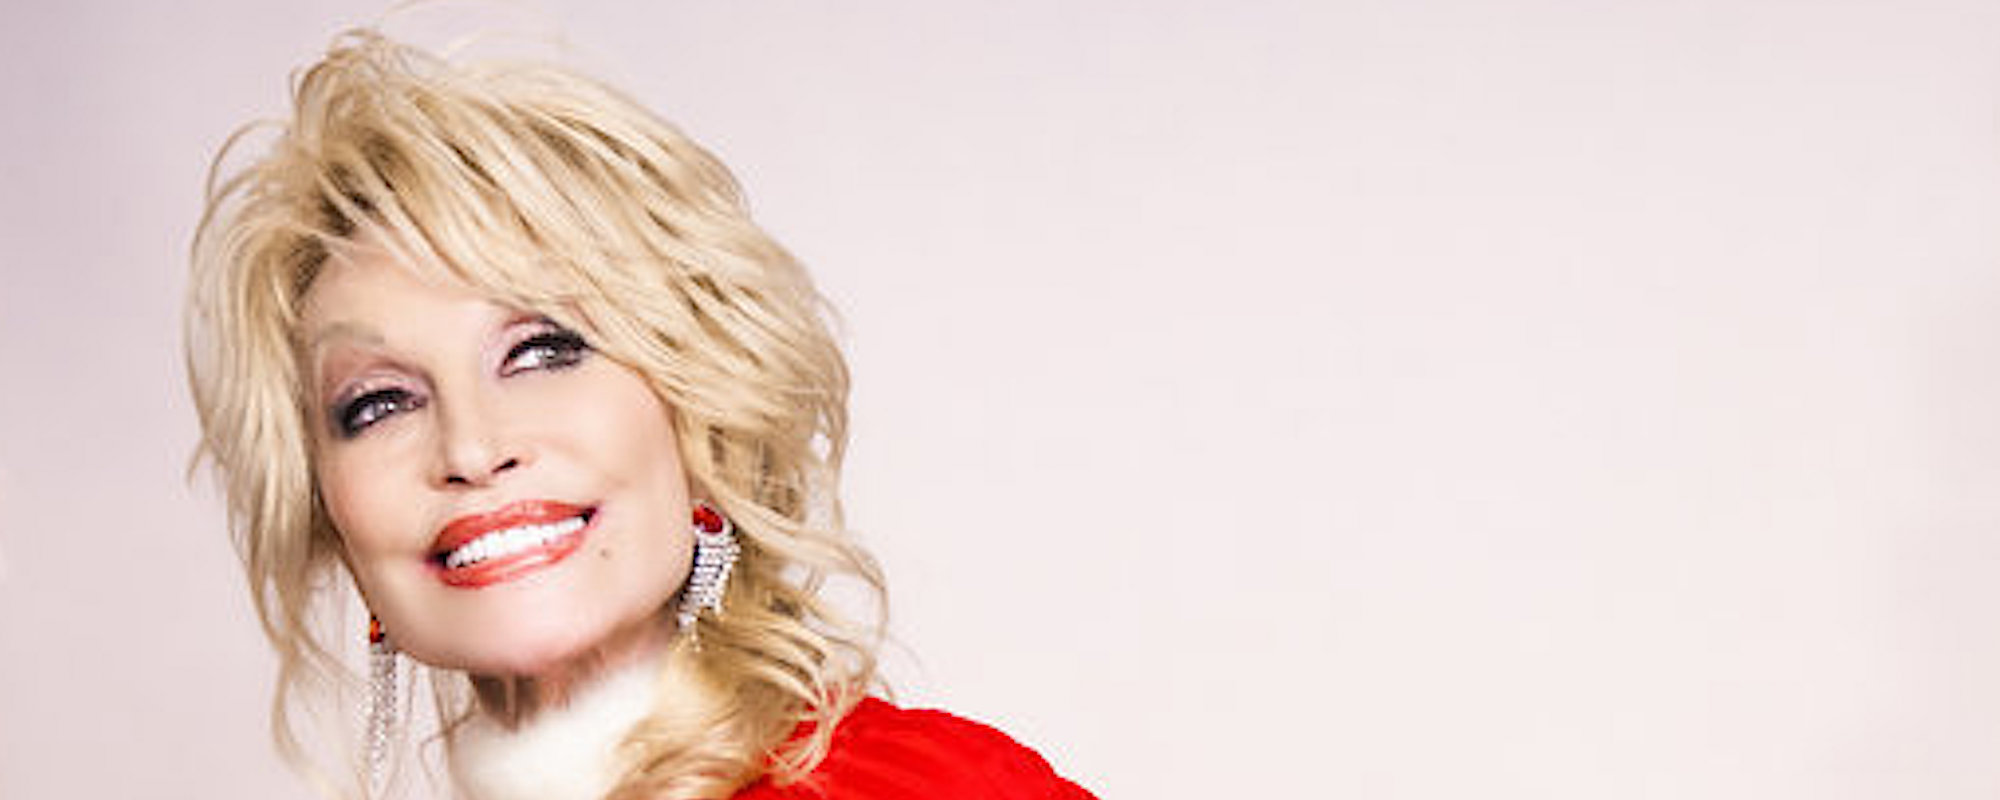 Dolly Parton Joins TikTok: “I Have Arrived!”